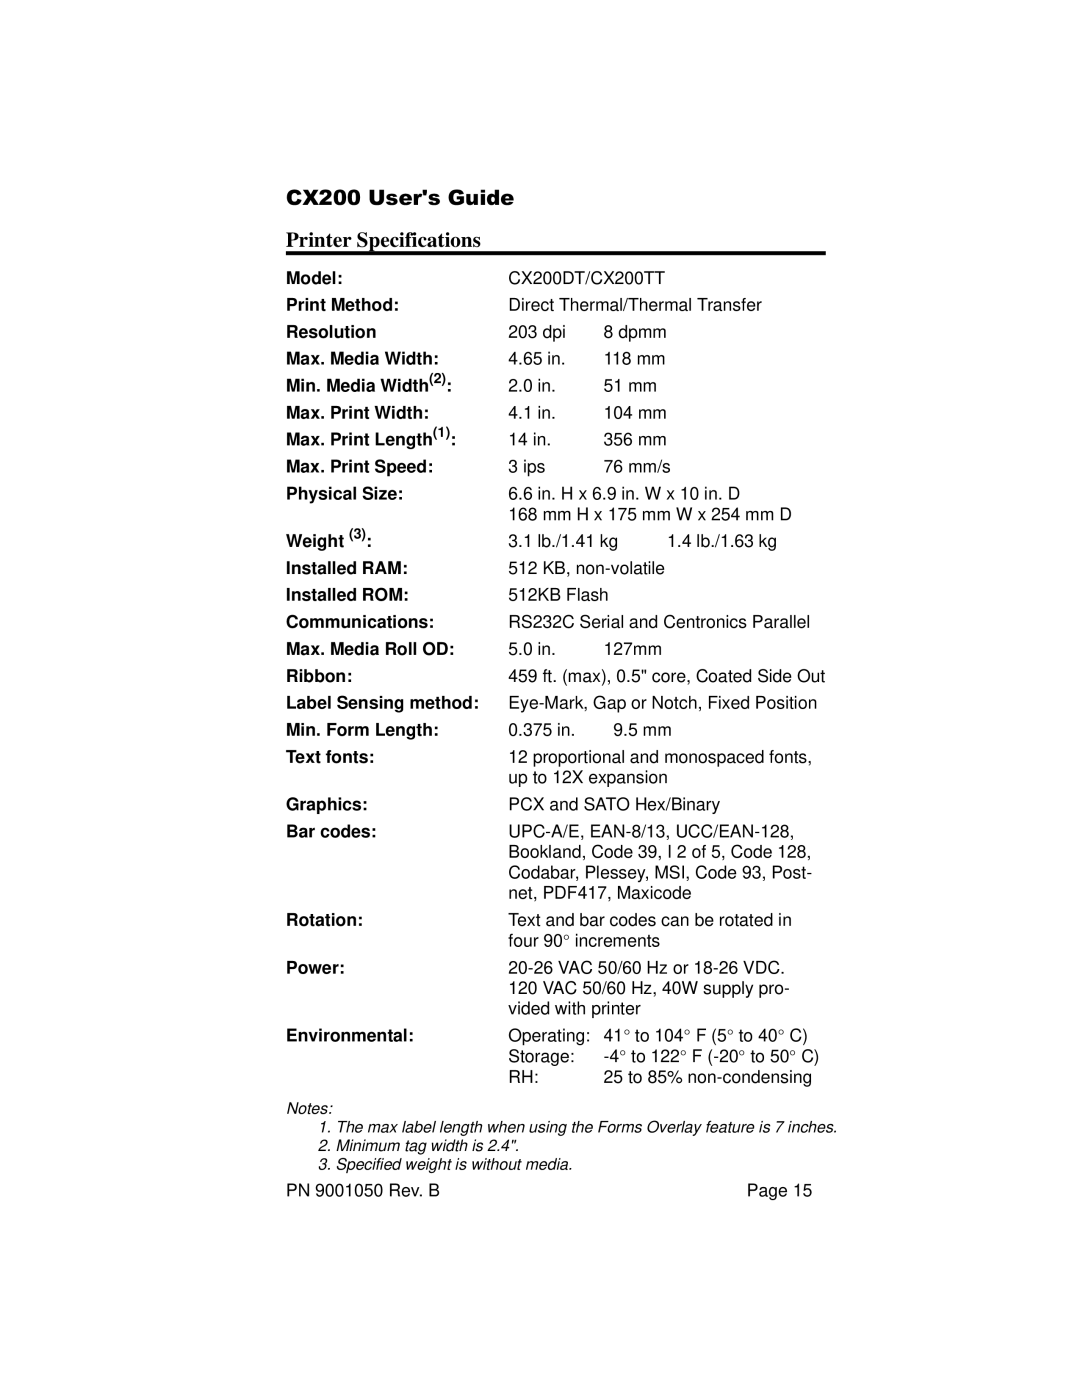 SATO manual Printer Specifications, CX200 Users Guide 